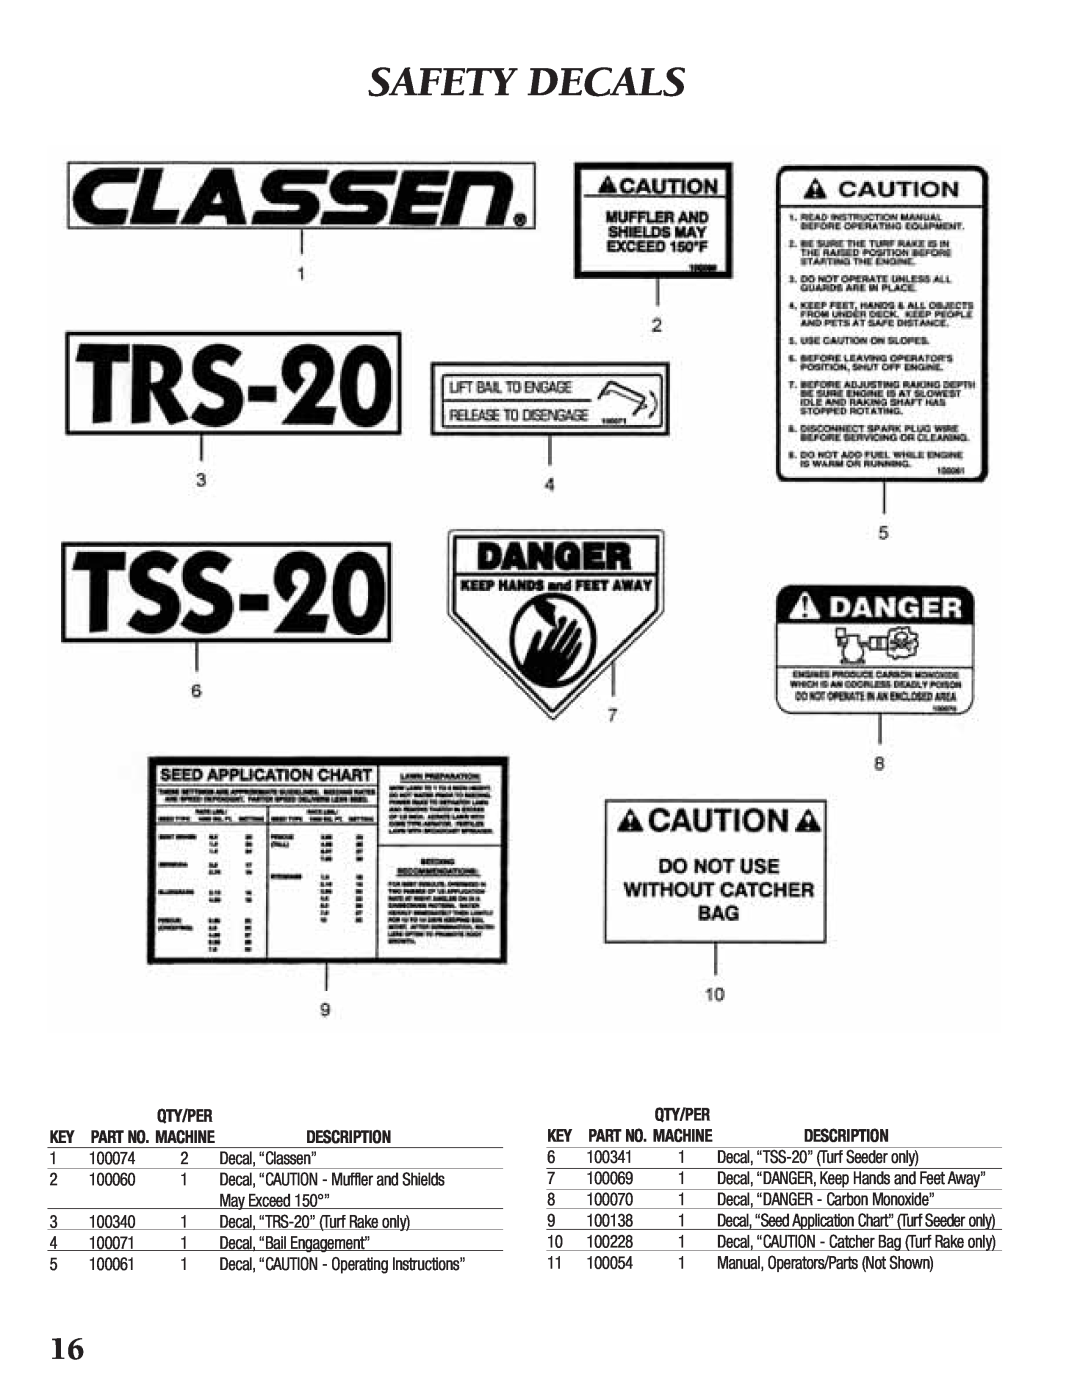 Little Wonder TRS-20, TSS-20 manual Safety Decals, Description 